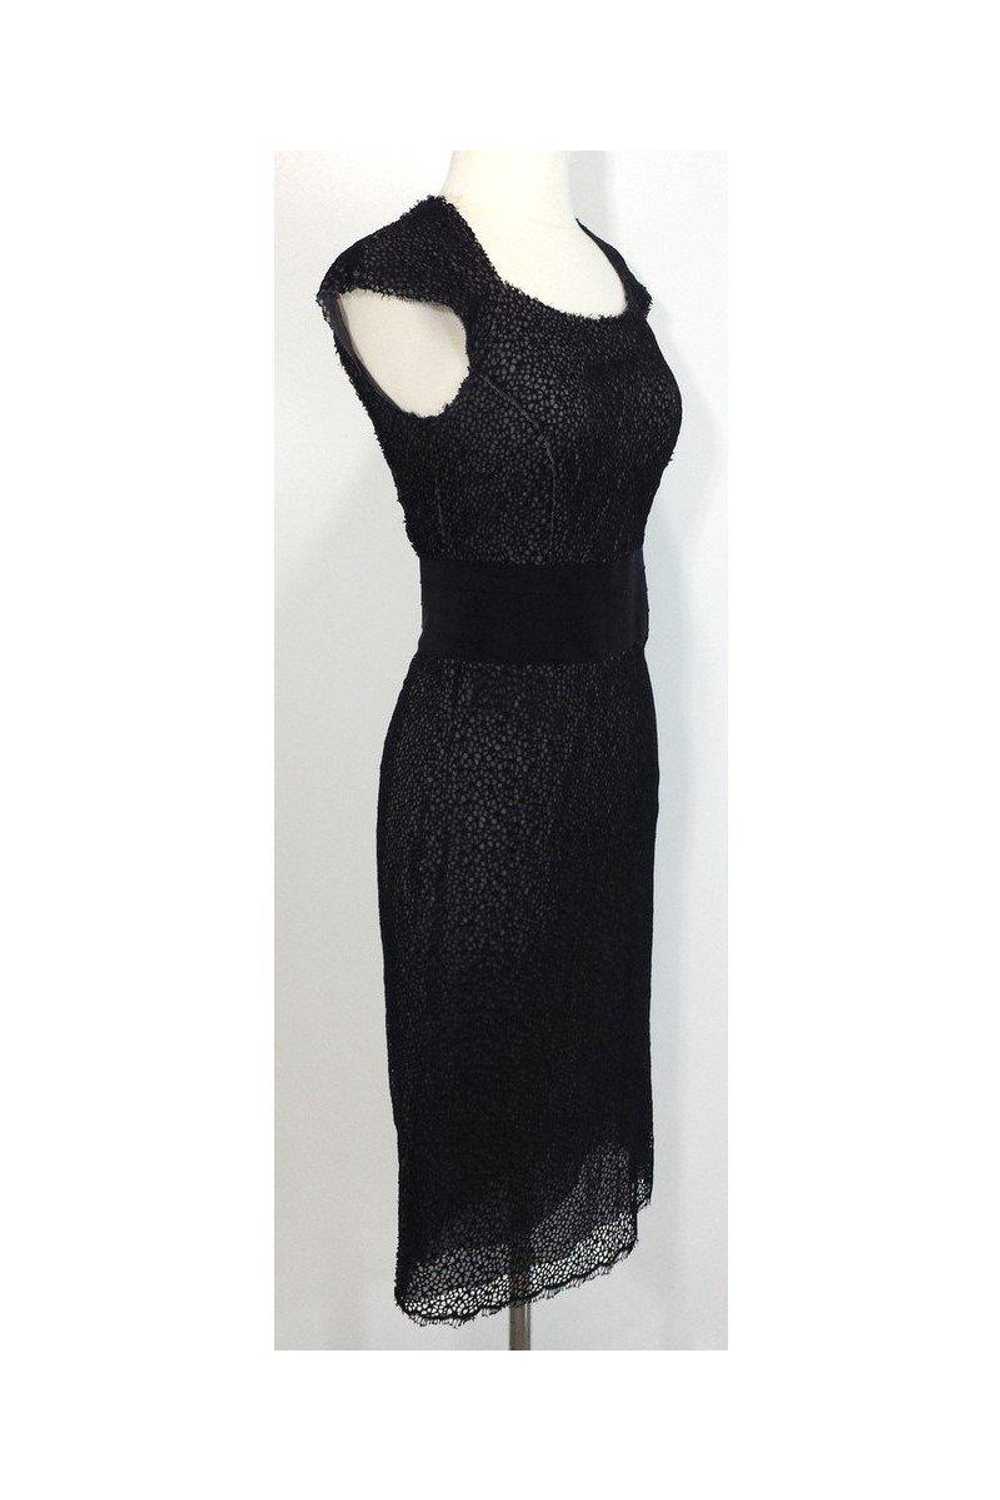 Ports 1961 - Black Lace Cap Sleeve Dress Sz 2 - image 2